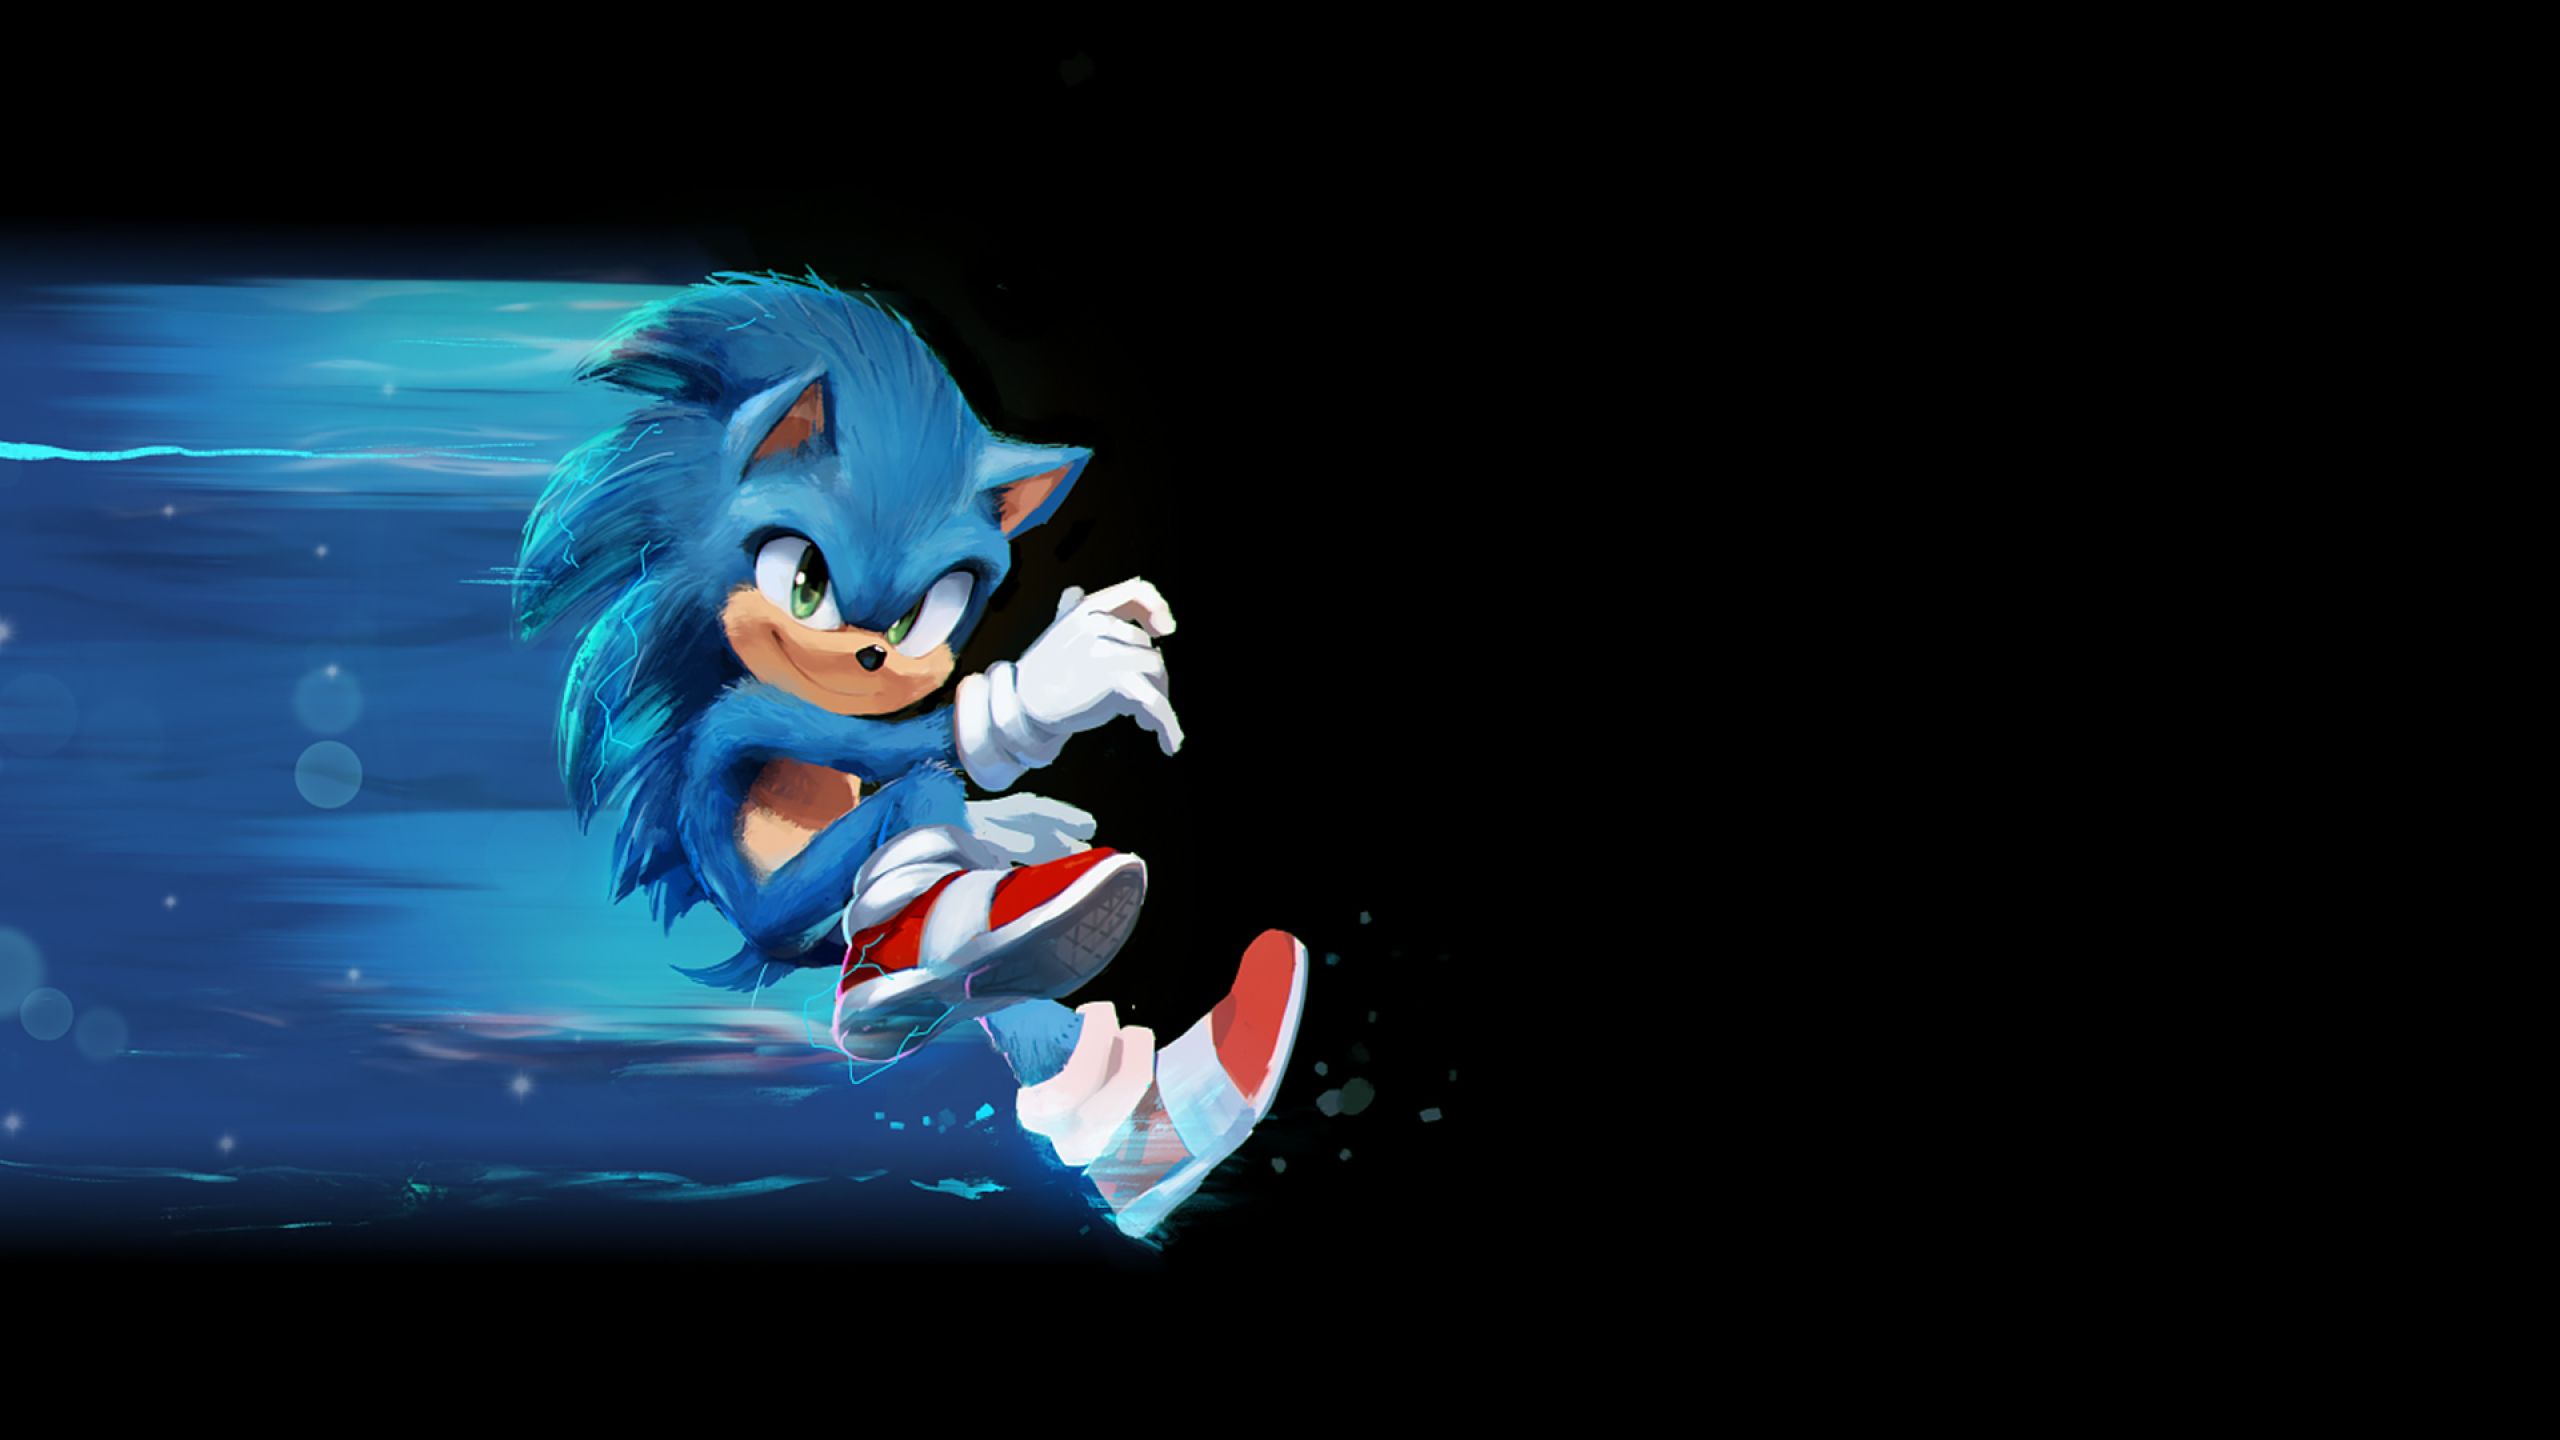 Sonic the hedgehog 2020 wallpaper 1920x1080 1080p 1920x1080 - Sonic